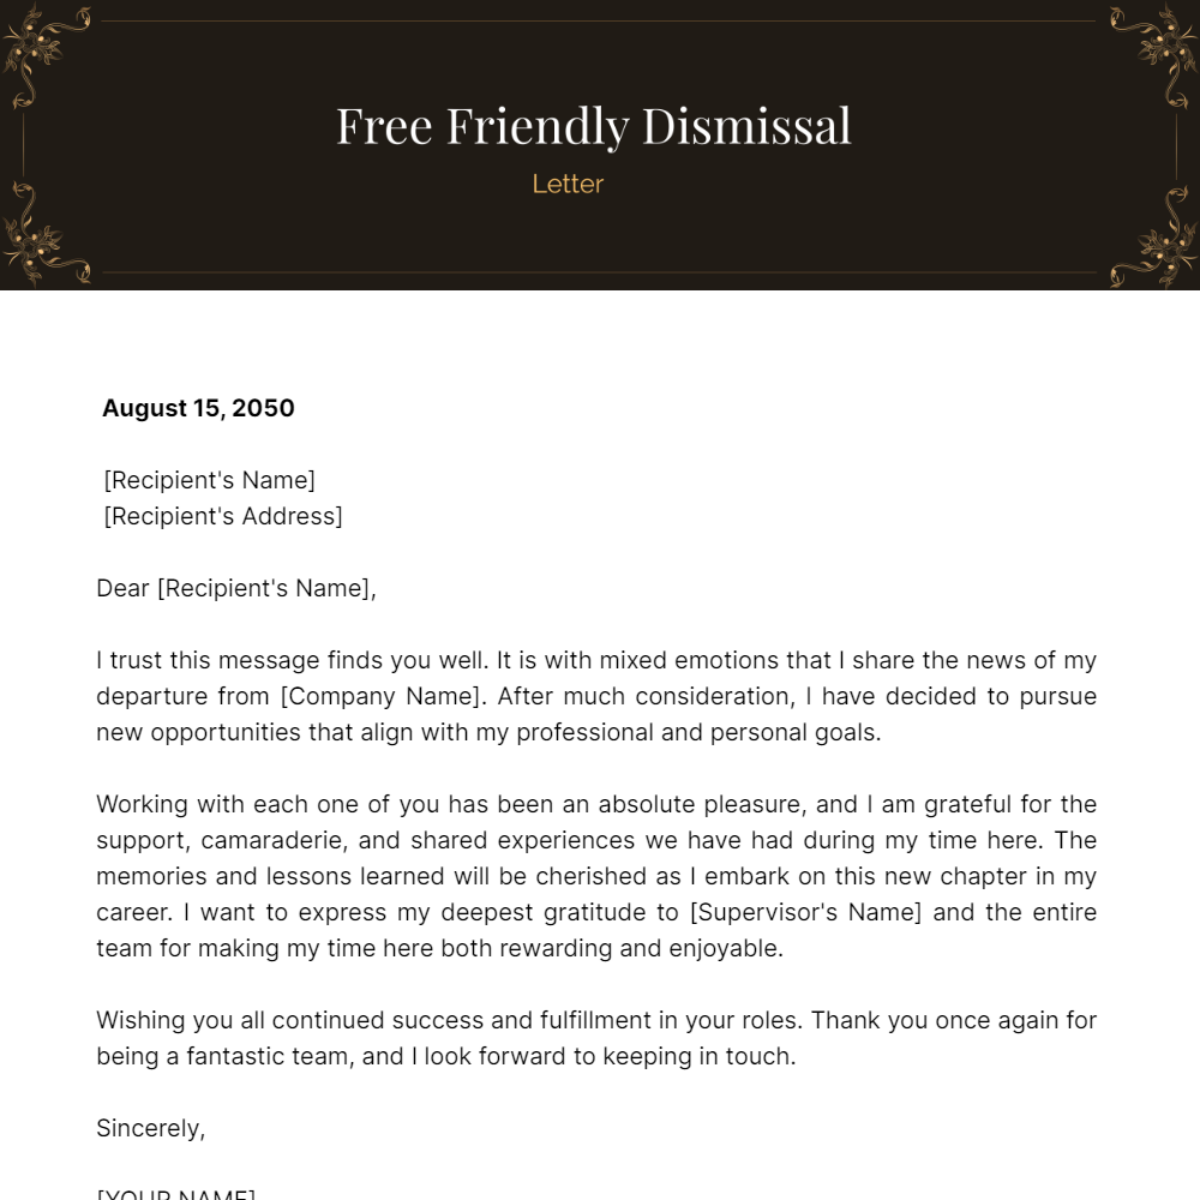 Friendly Dismissal Letter Template